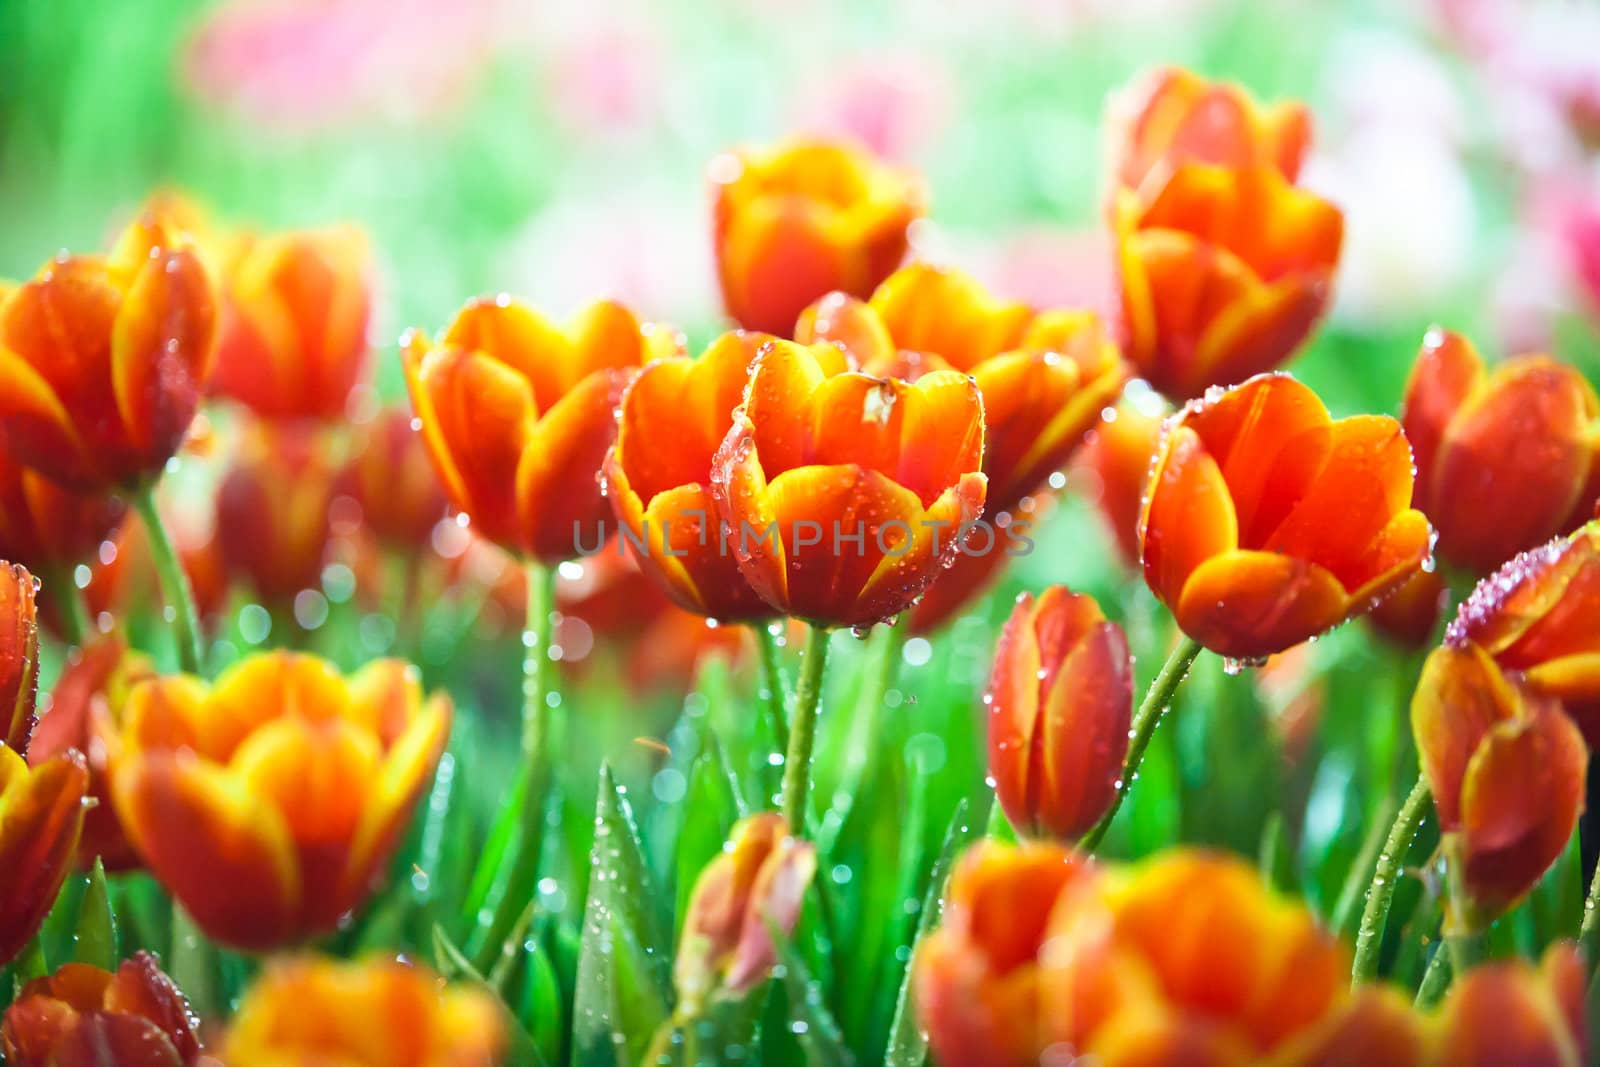 Tulips by Suriyaphoto